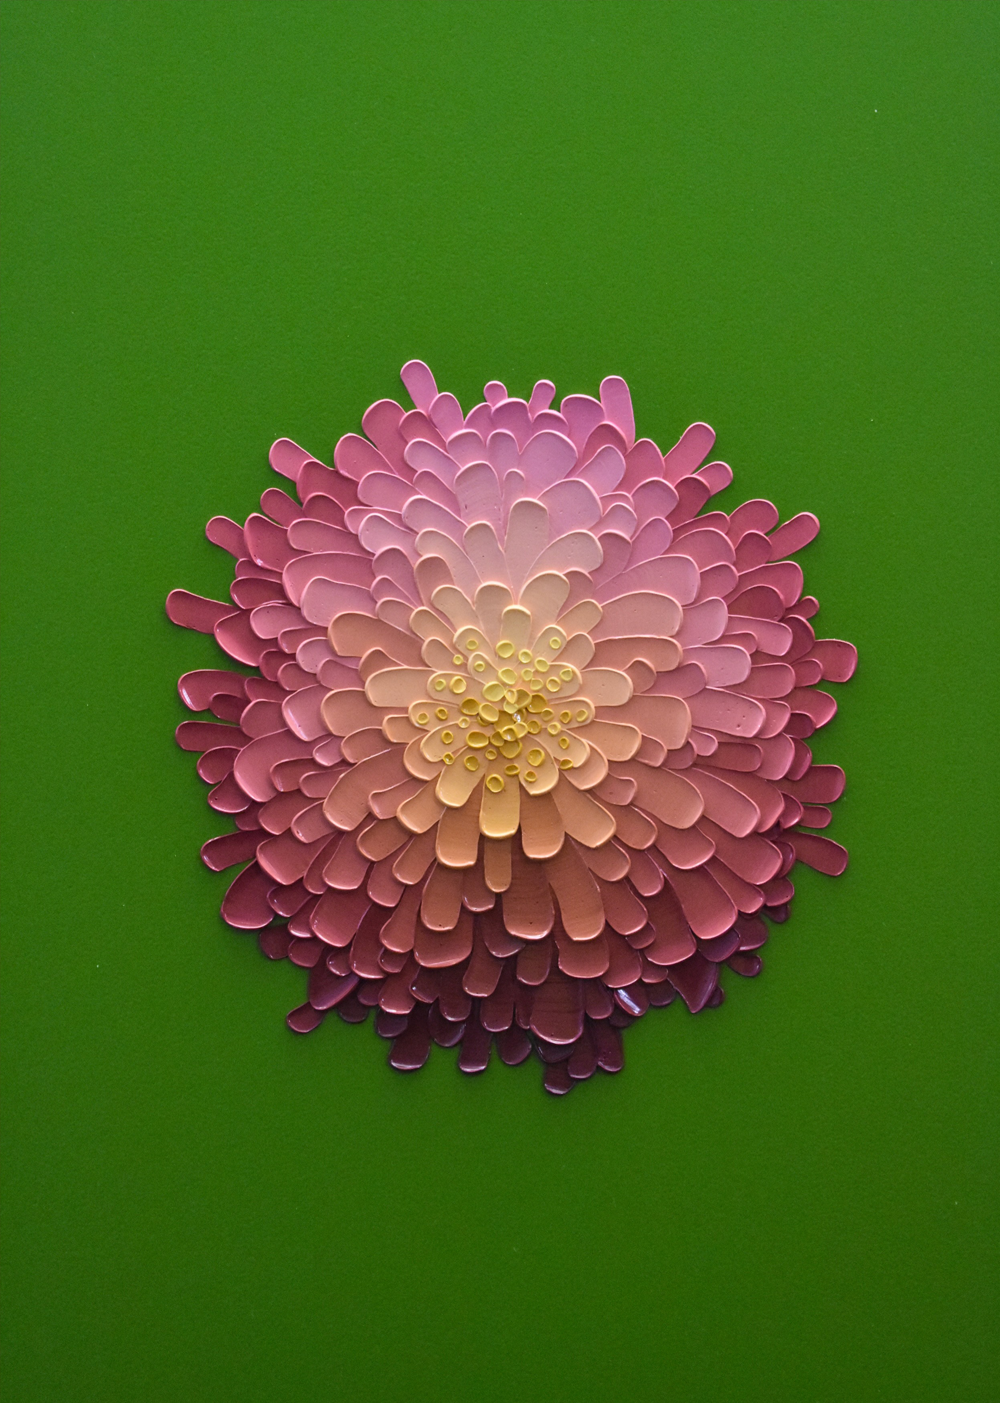 Chrysanthemum oil on canvas by Josh Davison